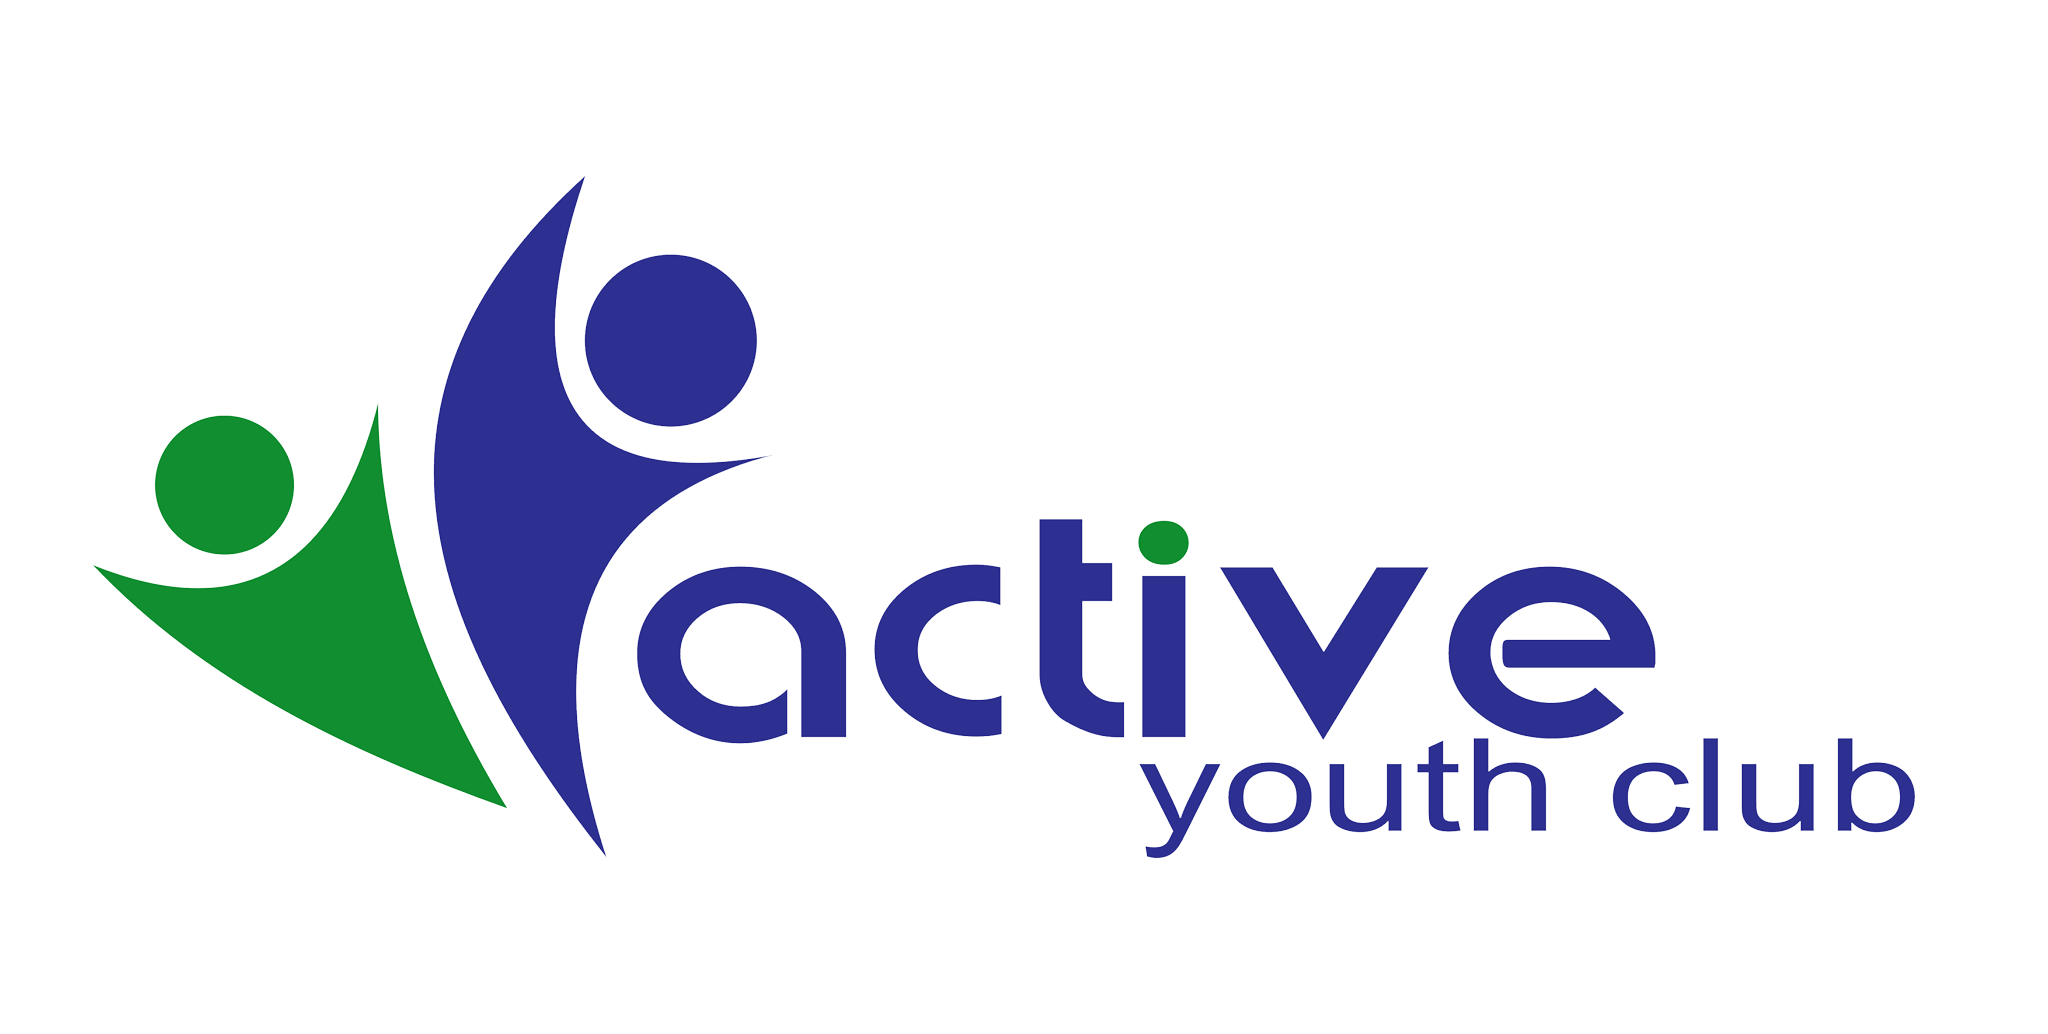 IZUM - Youth Club Active